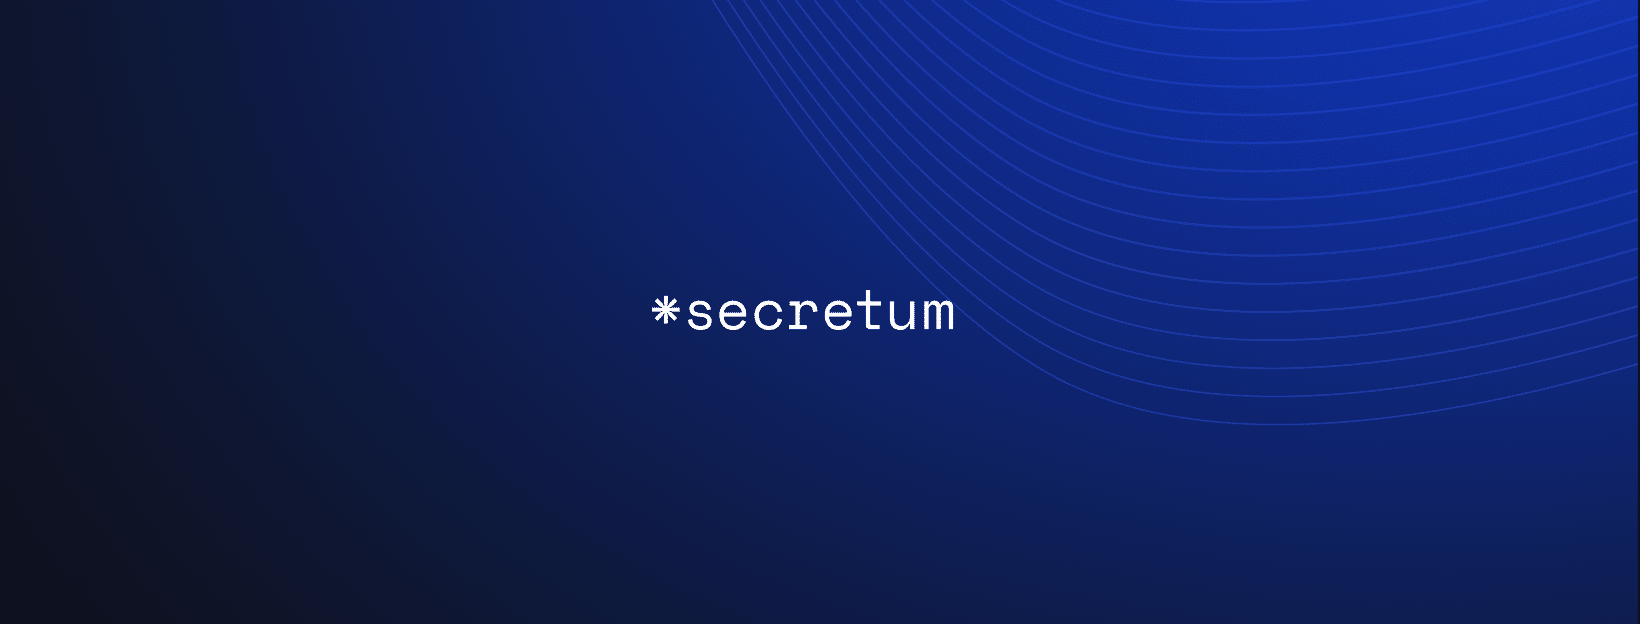 Secretum - The SOLANA Messaging App For The Blockchain Era